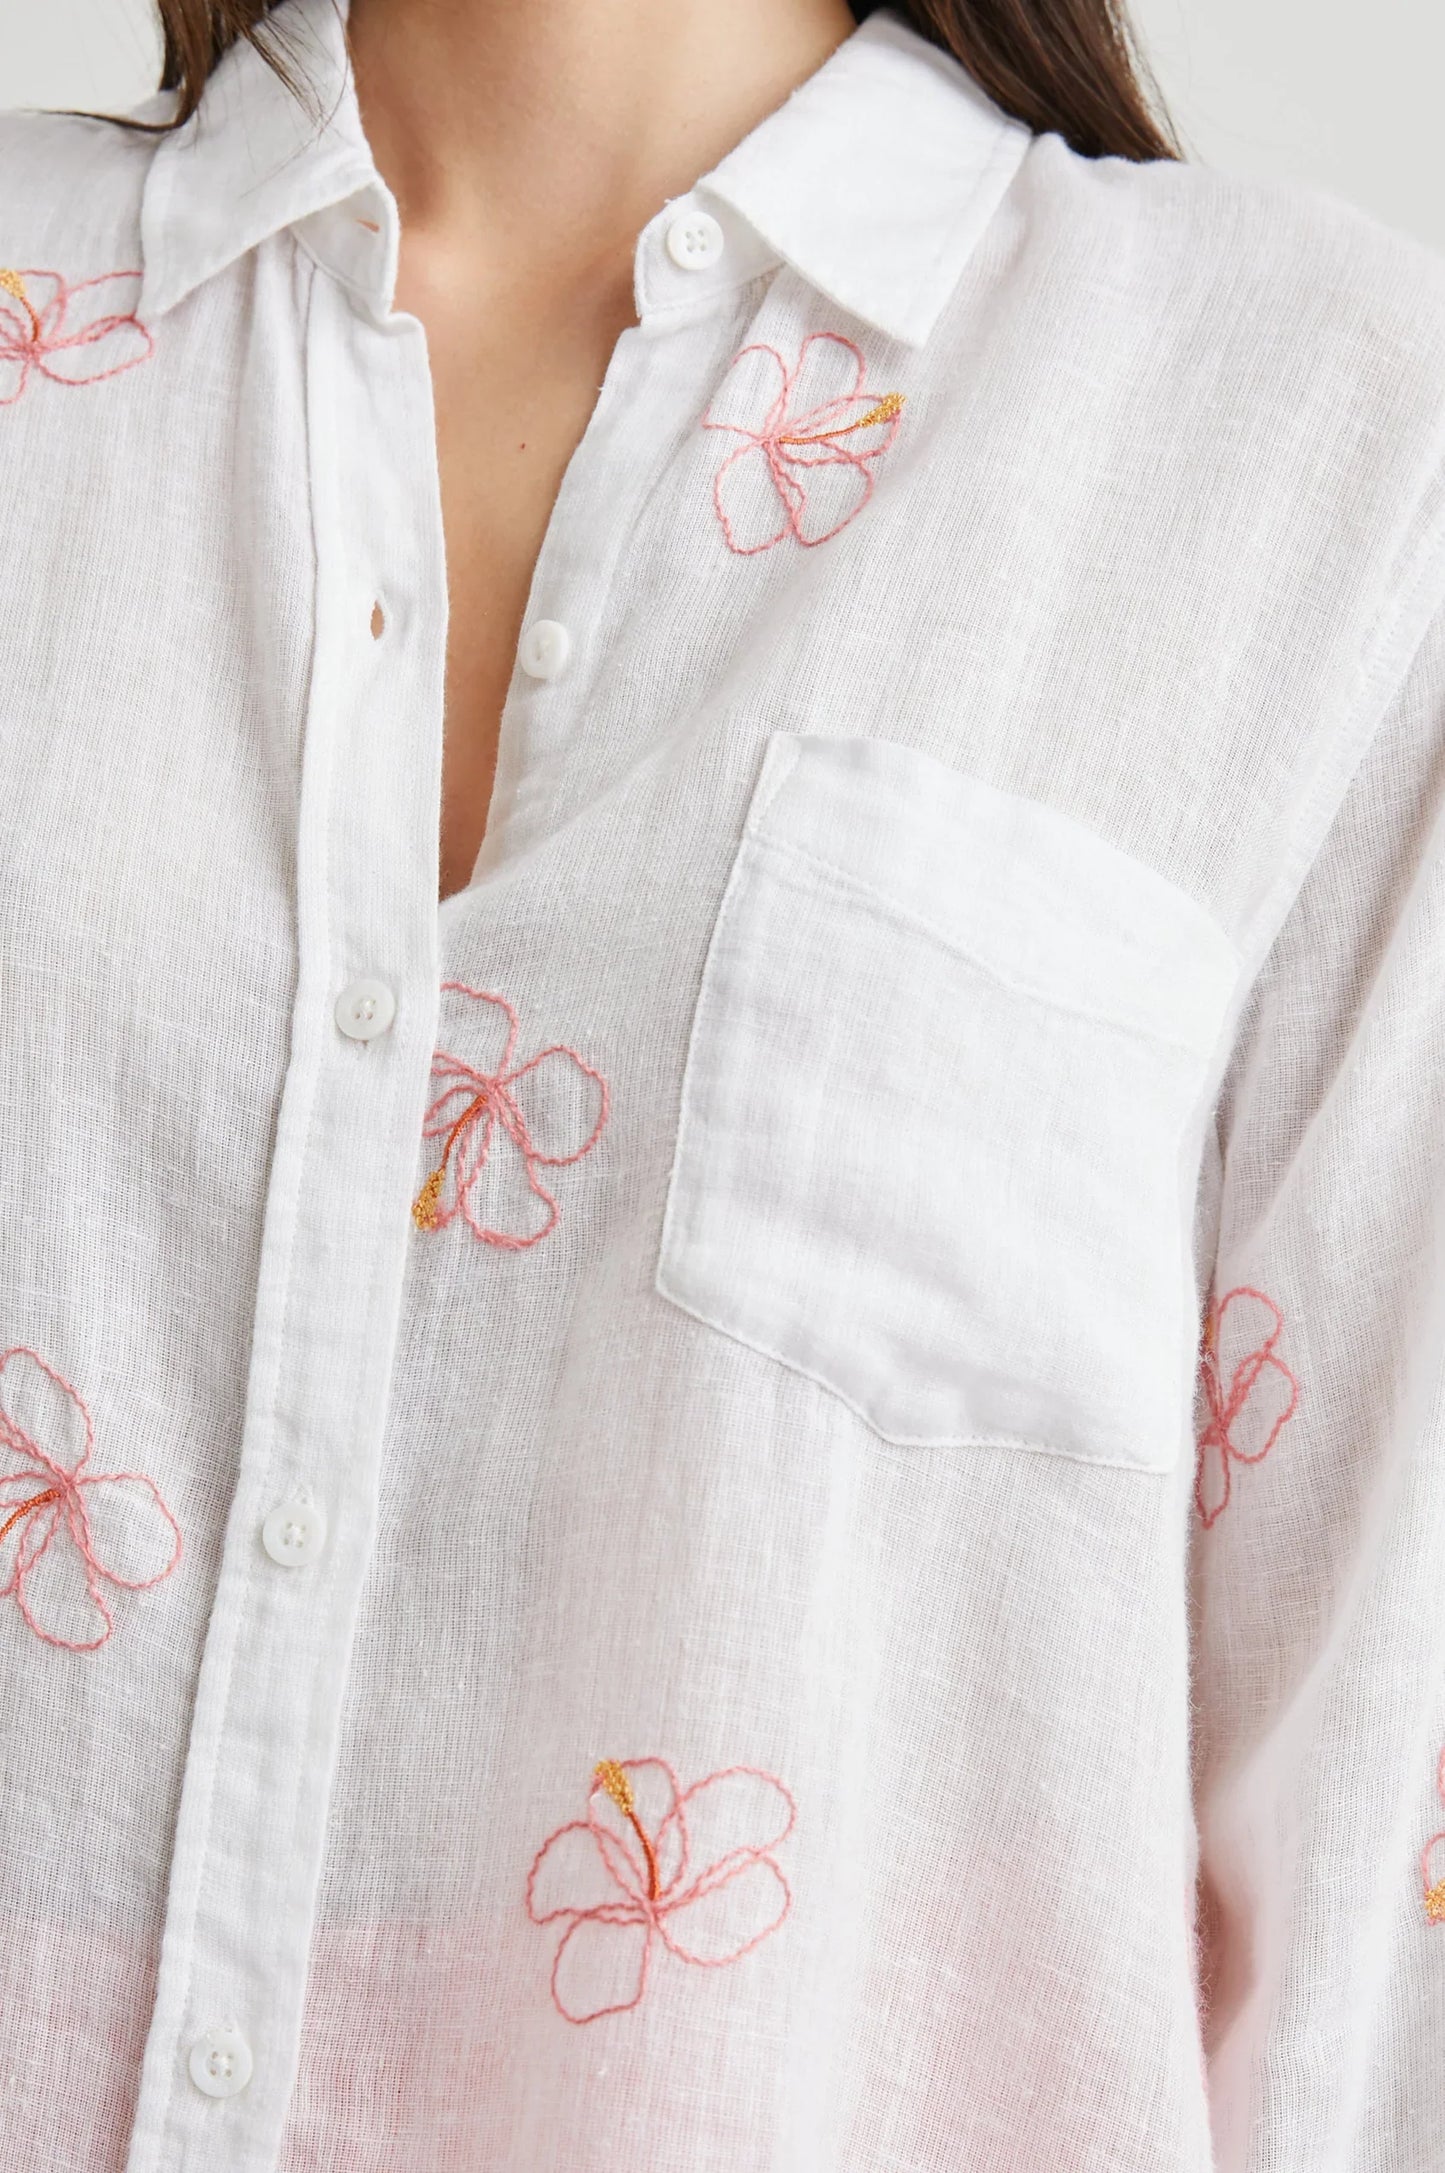 Charli shirt - hibiscus embroidery Shirts & Blouses RAILS